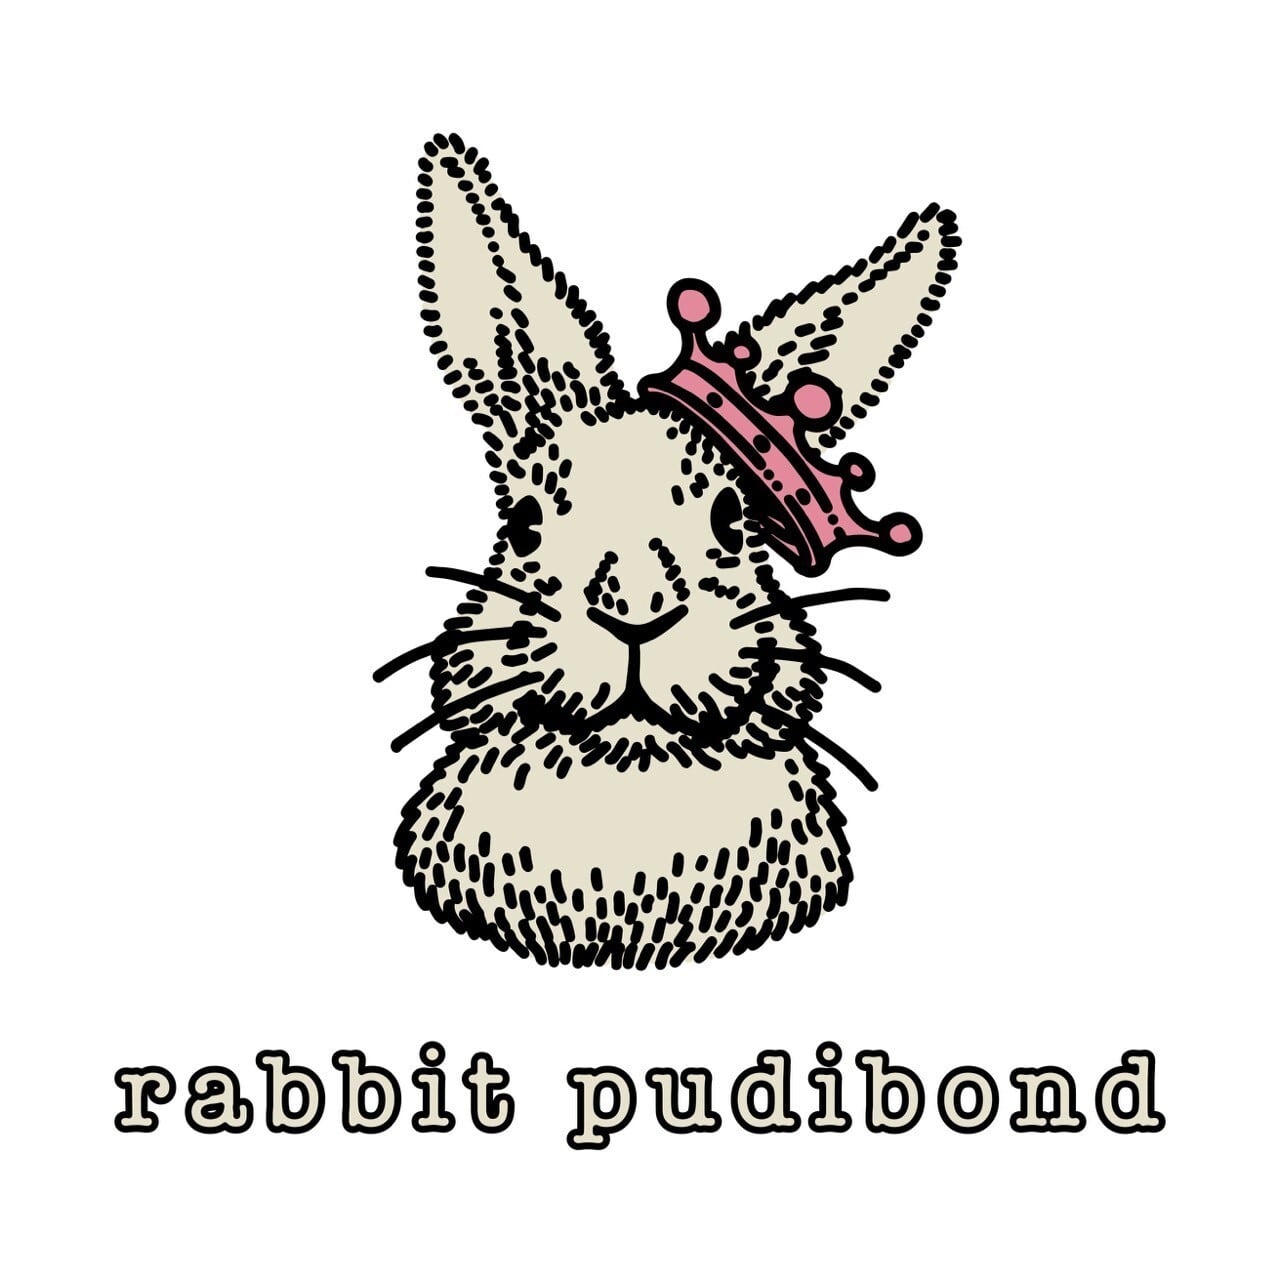 rabbit pudibond